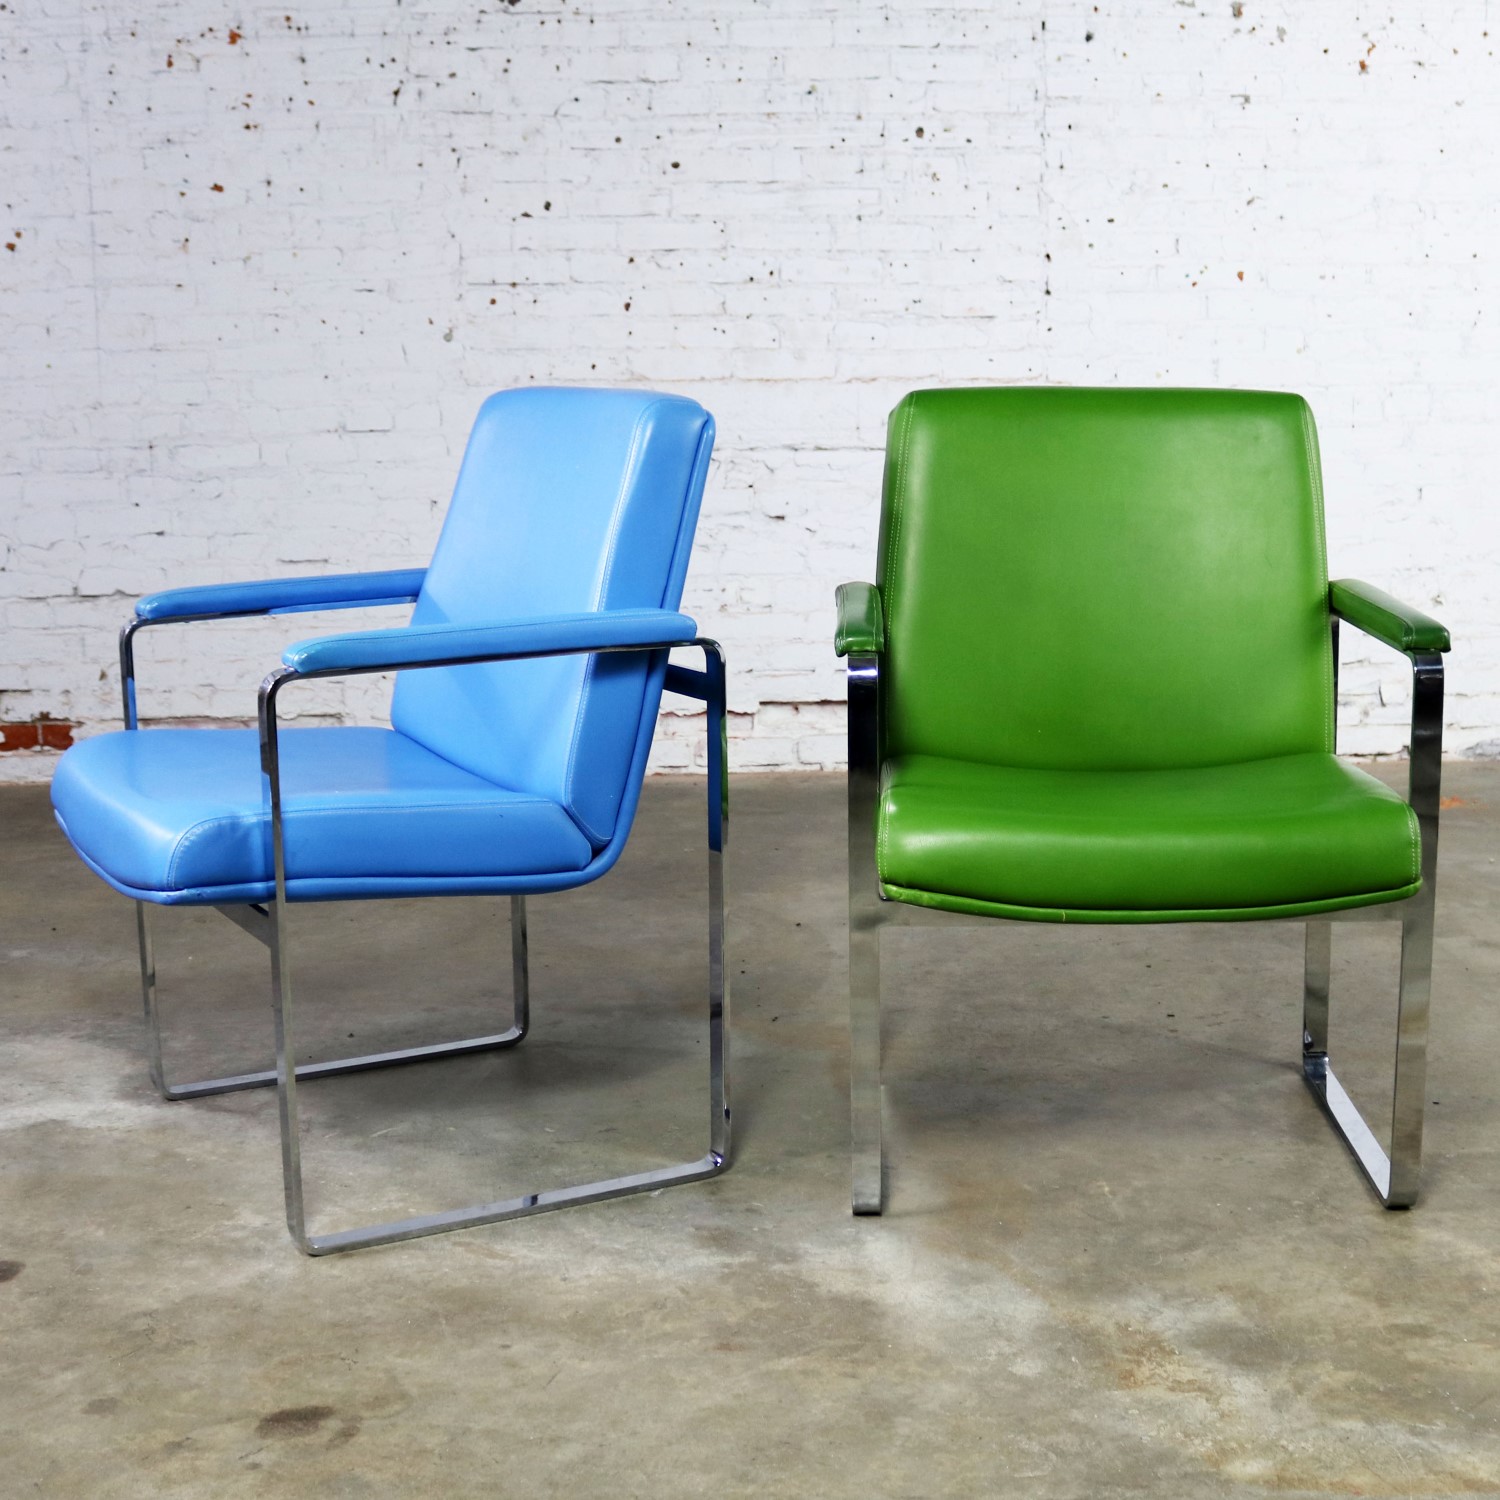 Mid Century Modern Chromcraft Flat Bar Chrome Chairs One Blue One Green Vinyl